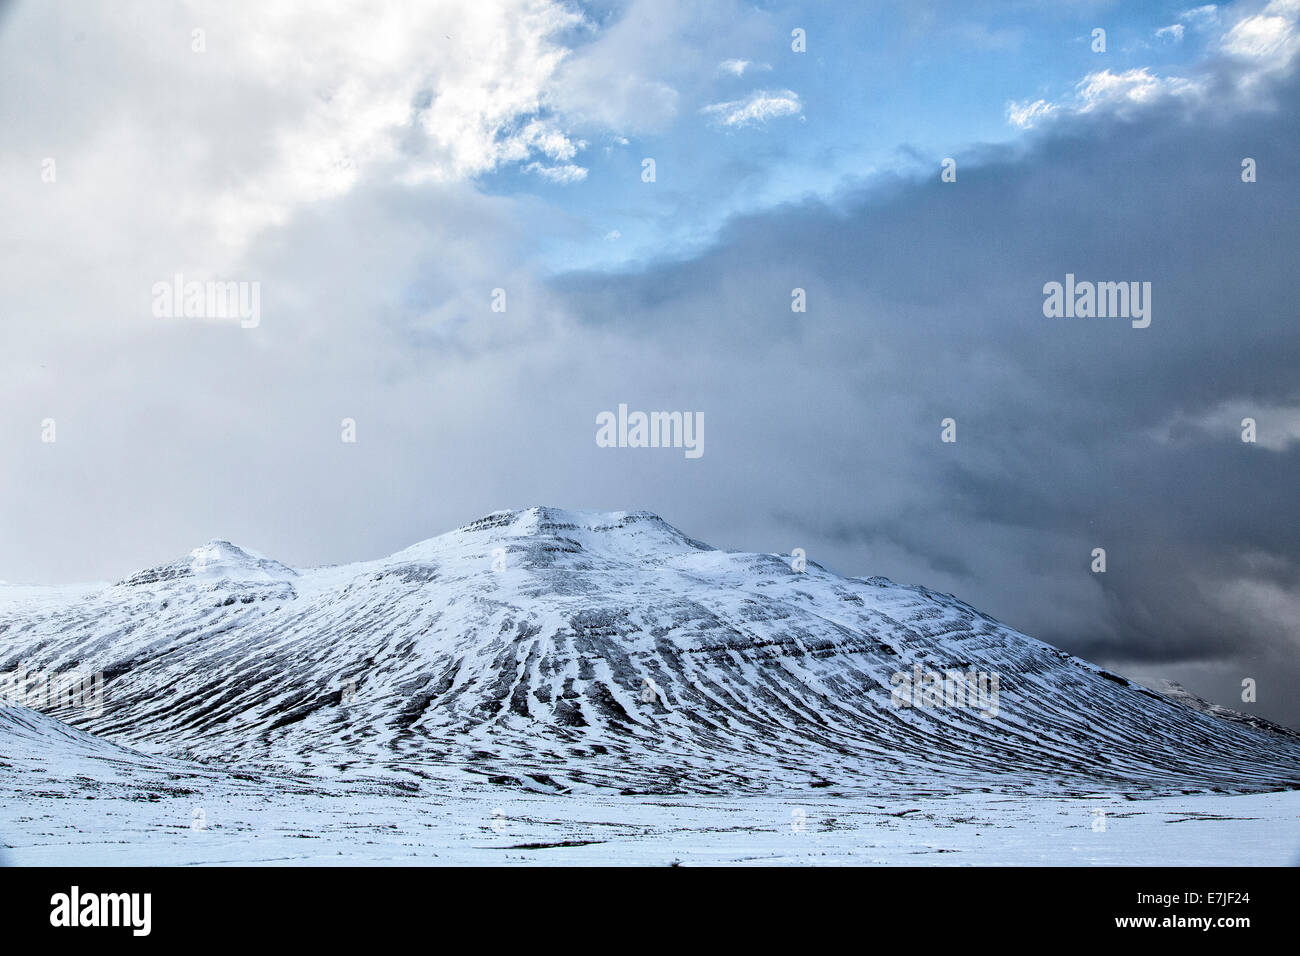 Akureyri, autumn, mood, Iceland, Europe, scenery, landscape, Oexnadalsheidi, Oexnadalur, snow, mood, Varmahlid, mountain, winter Stock Photo